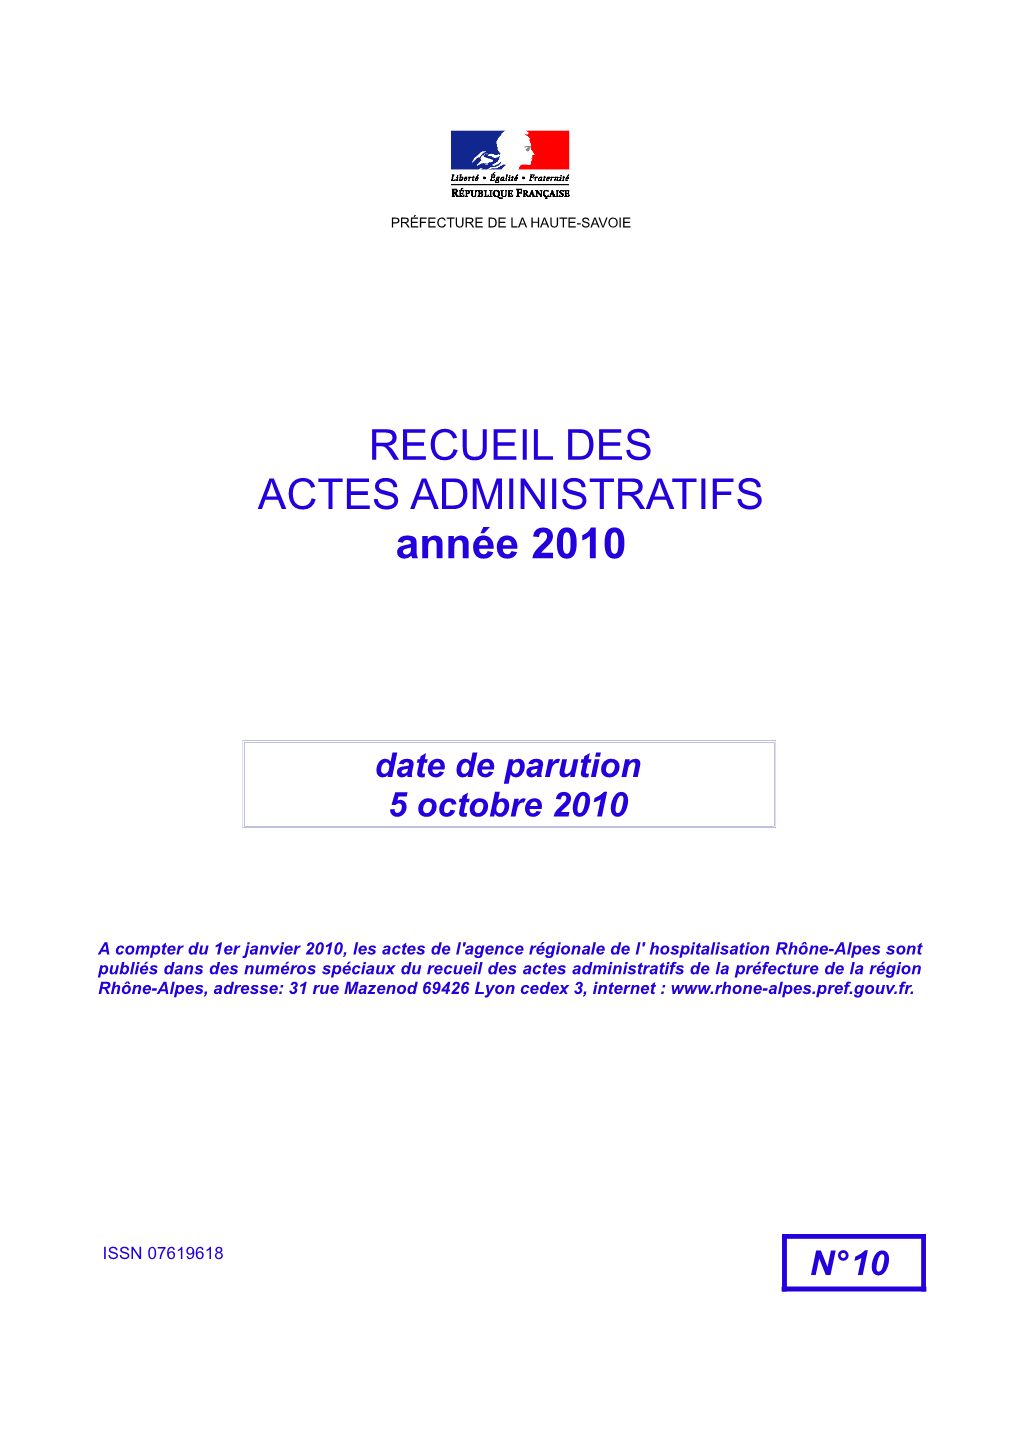 010 Recueil Des Actes Administratifs